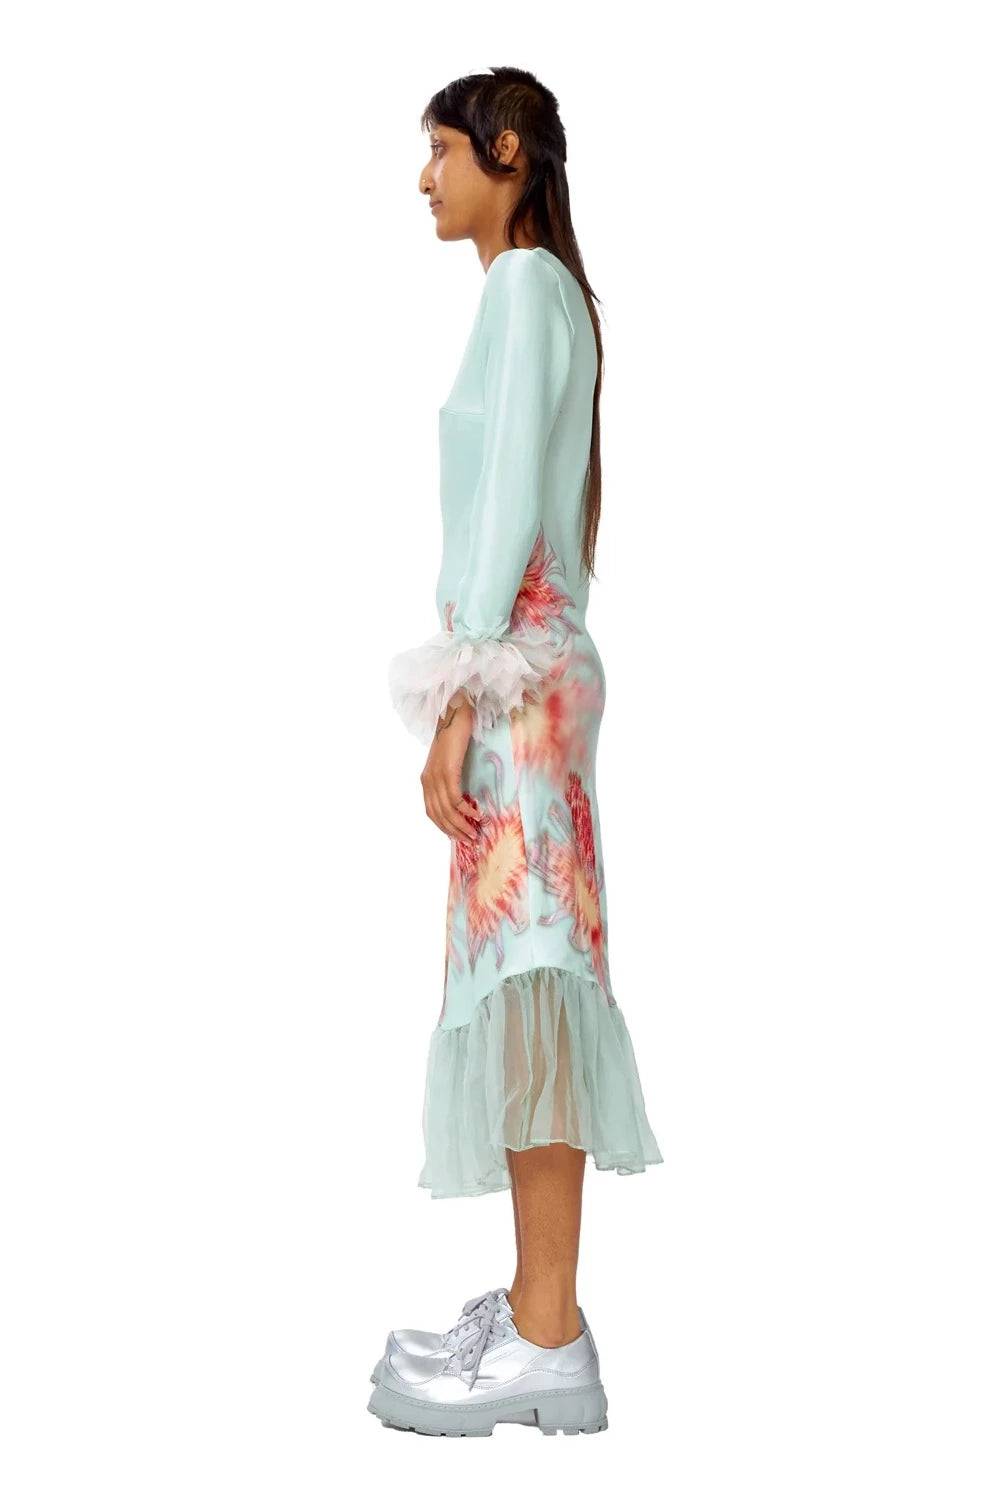 Collina Strada - Satin Fresia Dress: Mint Chrysanthemum